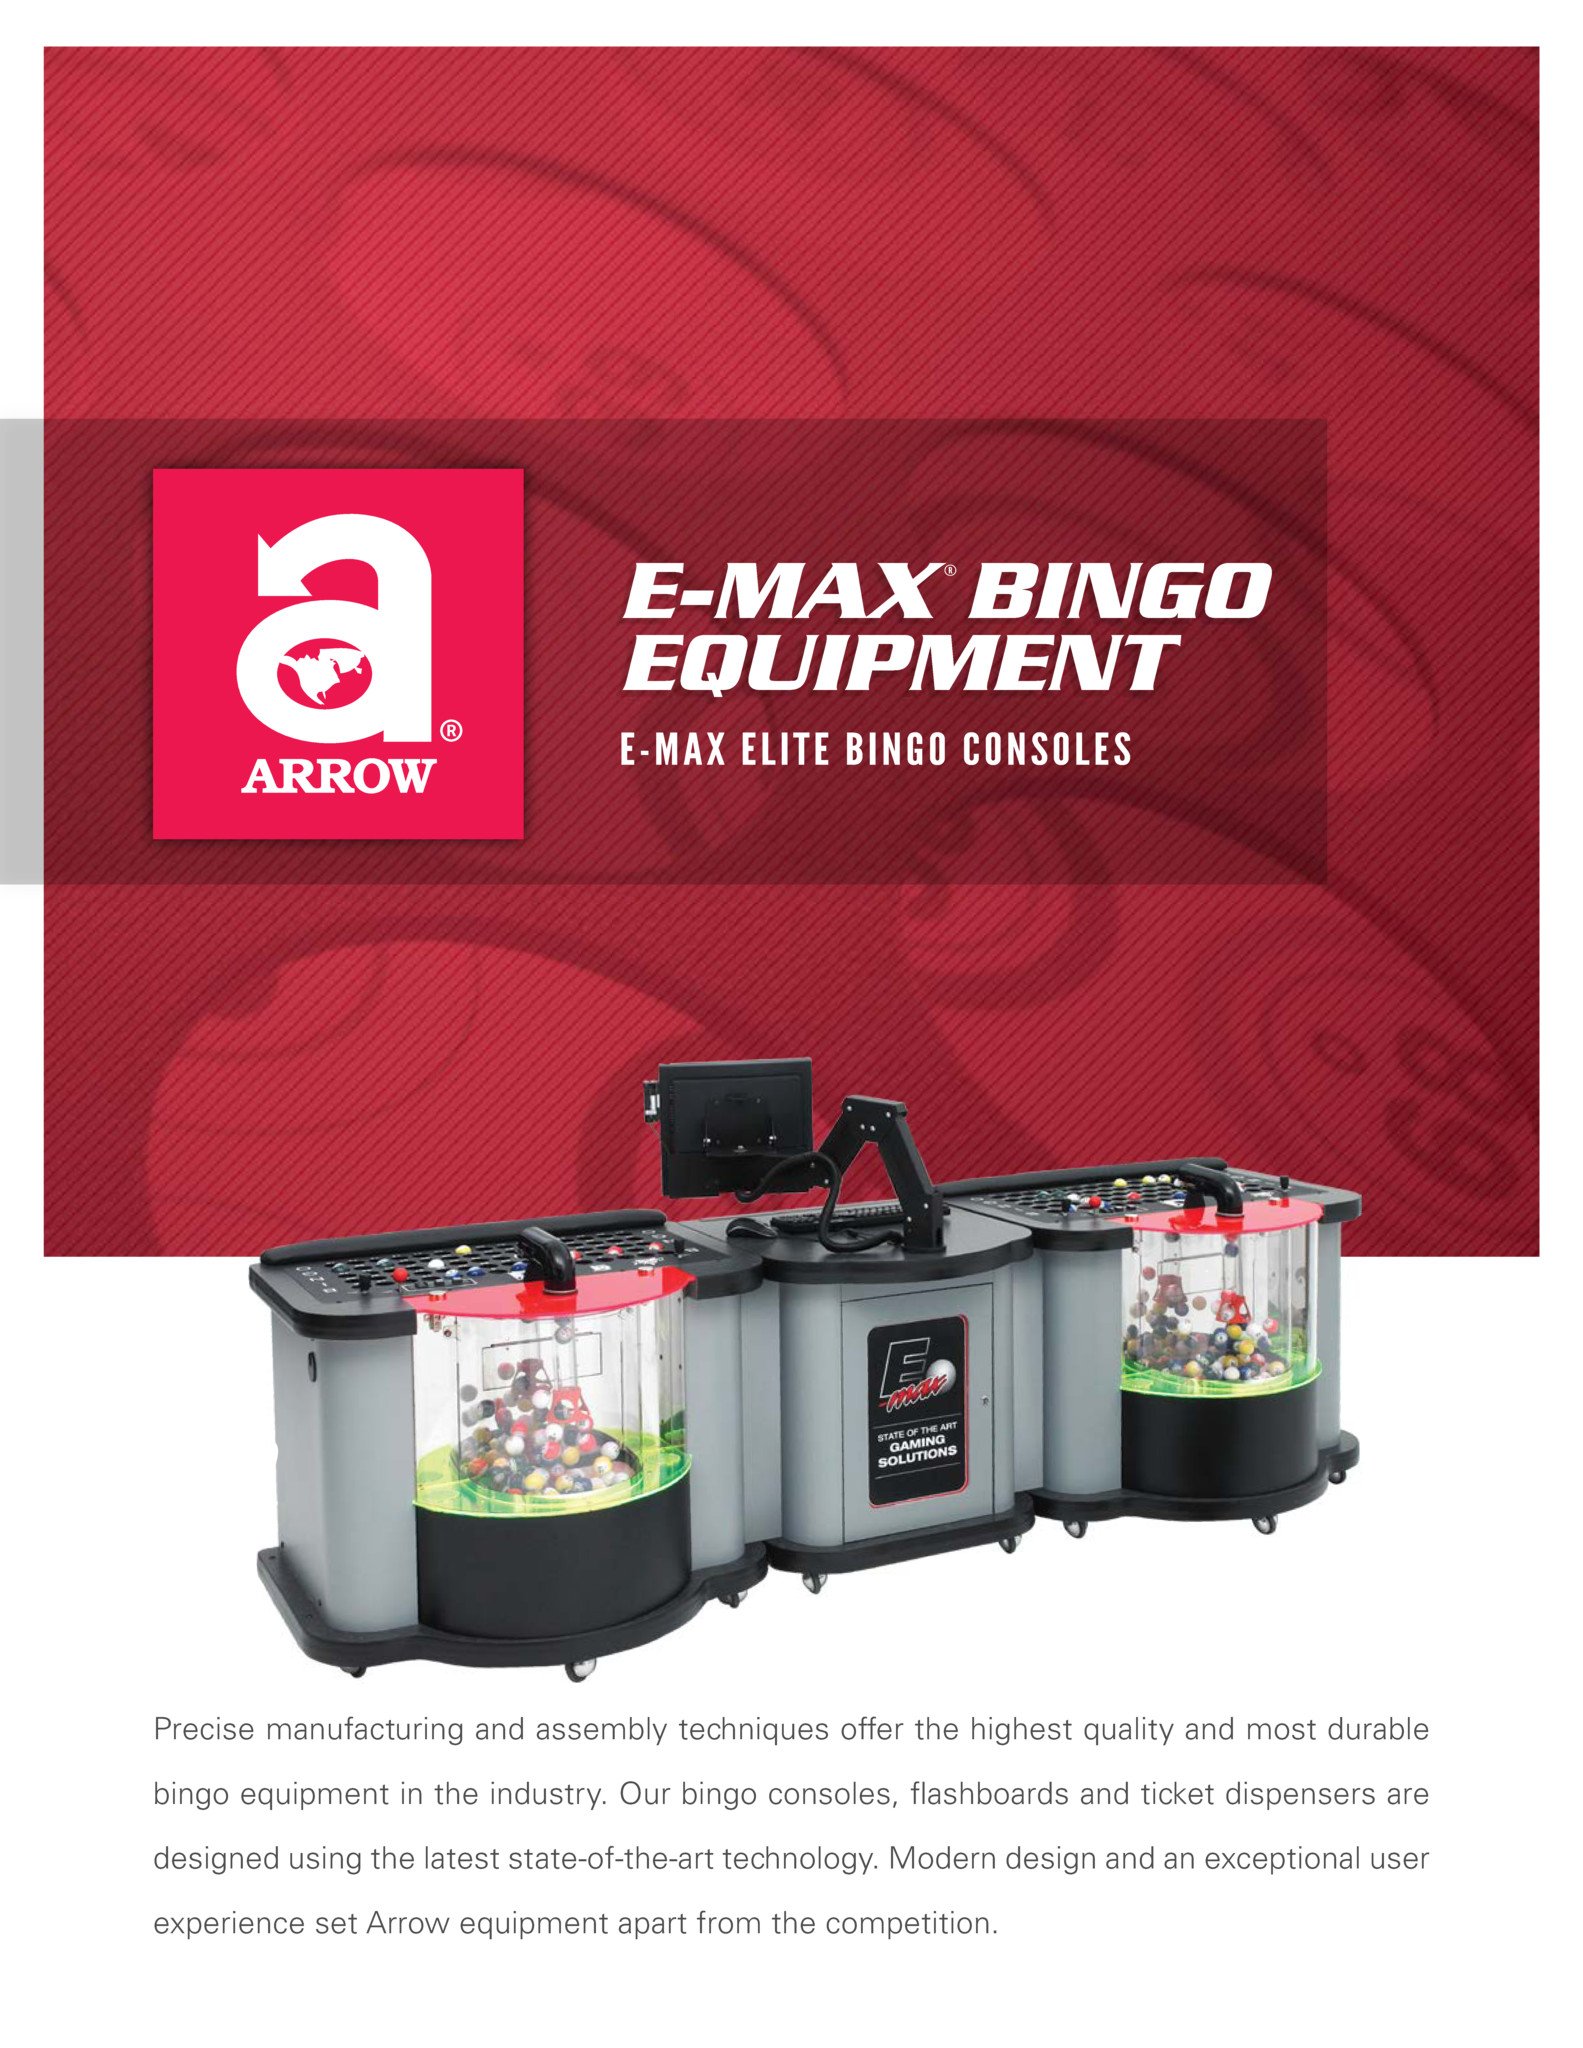 E-max Elite Bingo Console Flyer Promotional Materials/Equipment Flyers & Brochures